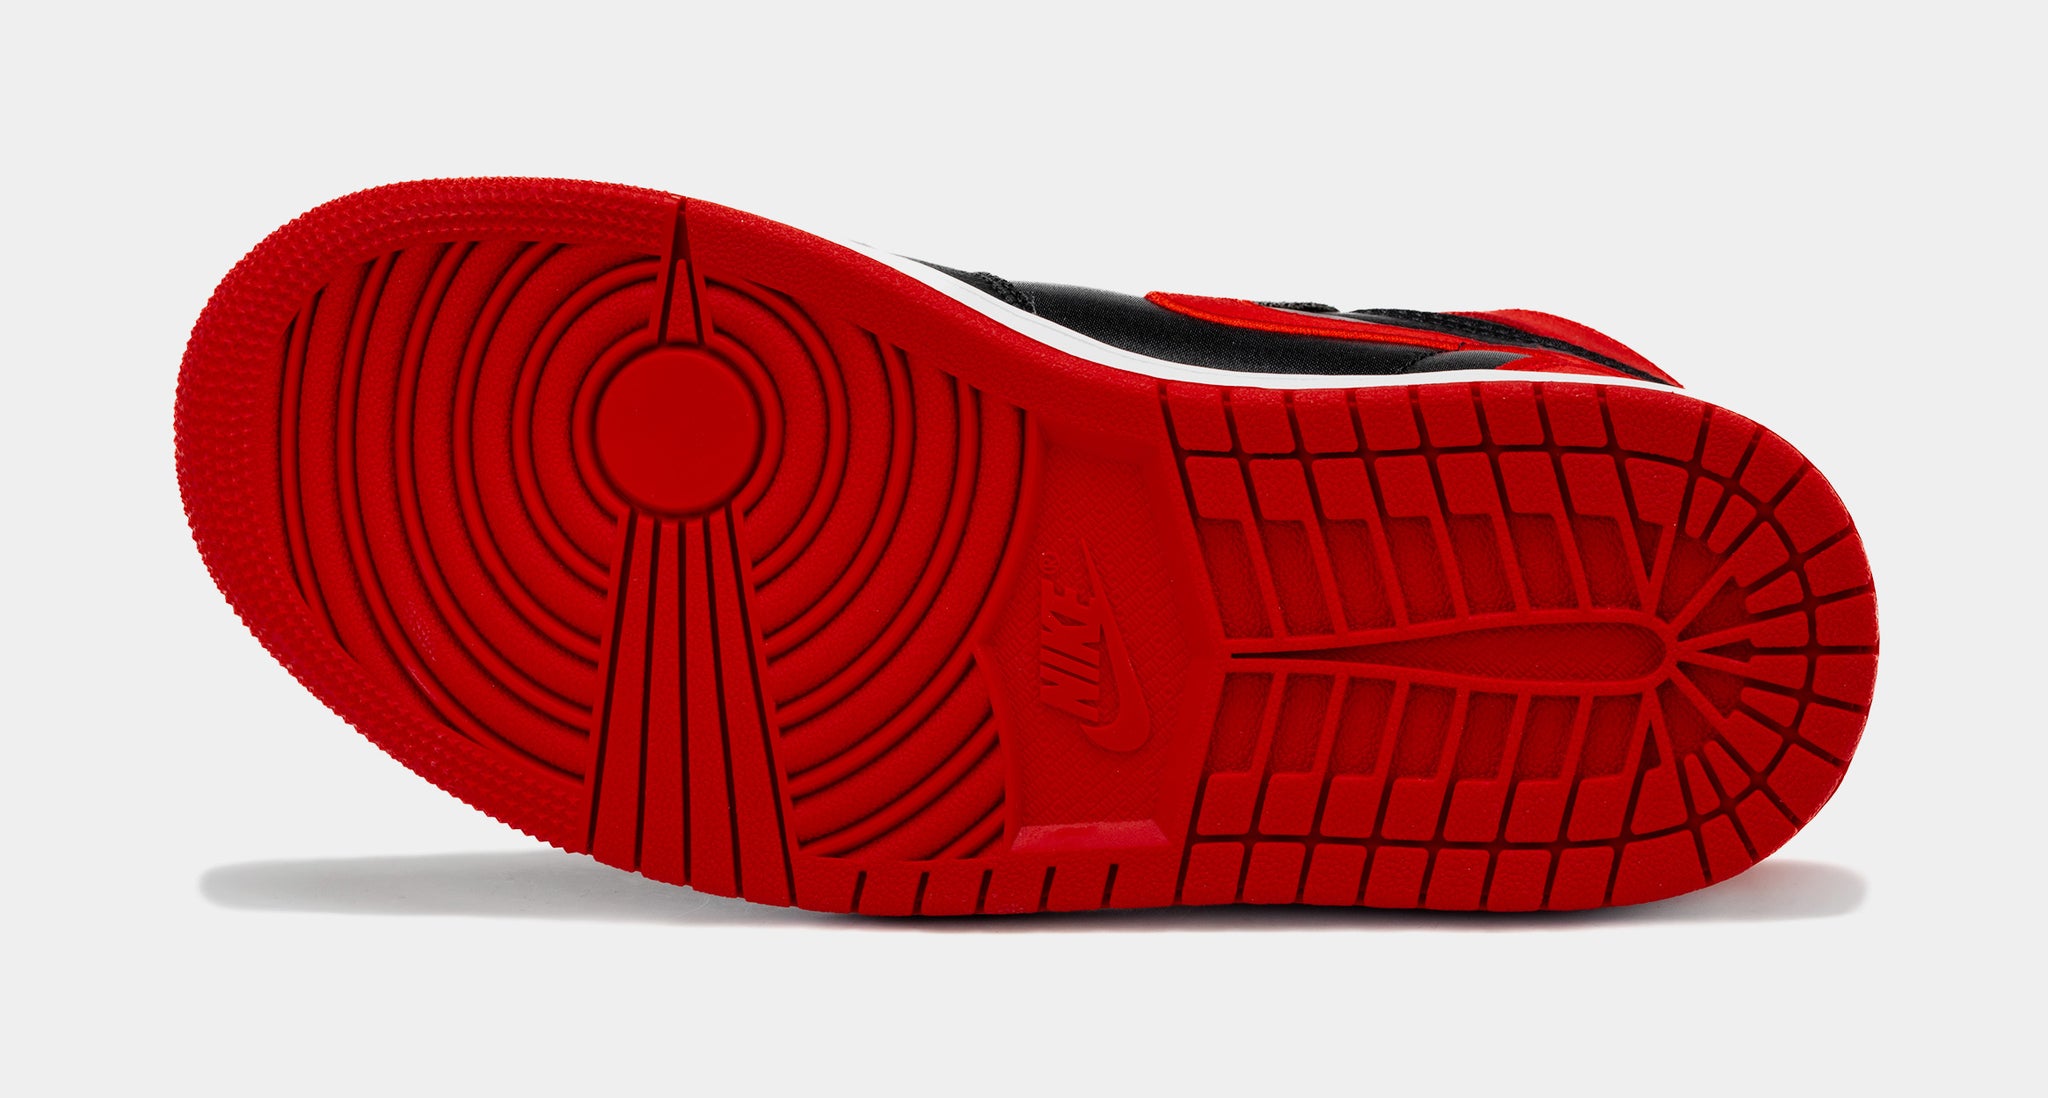 Air Jordan 1 Retro High OG '85 'Varsity Red' Shoes - 7